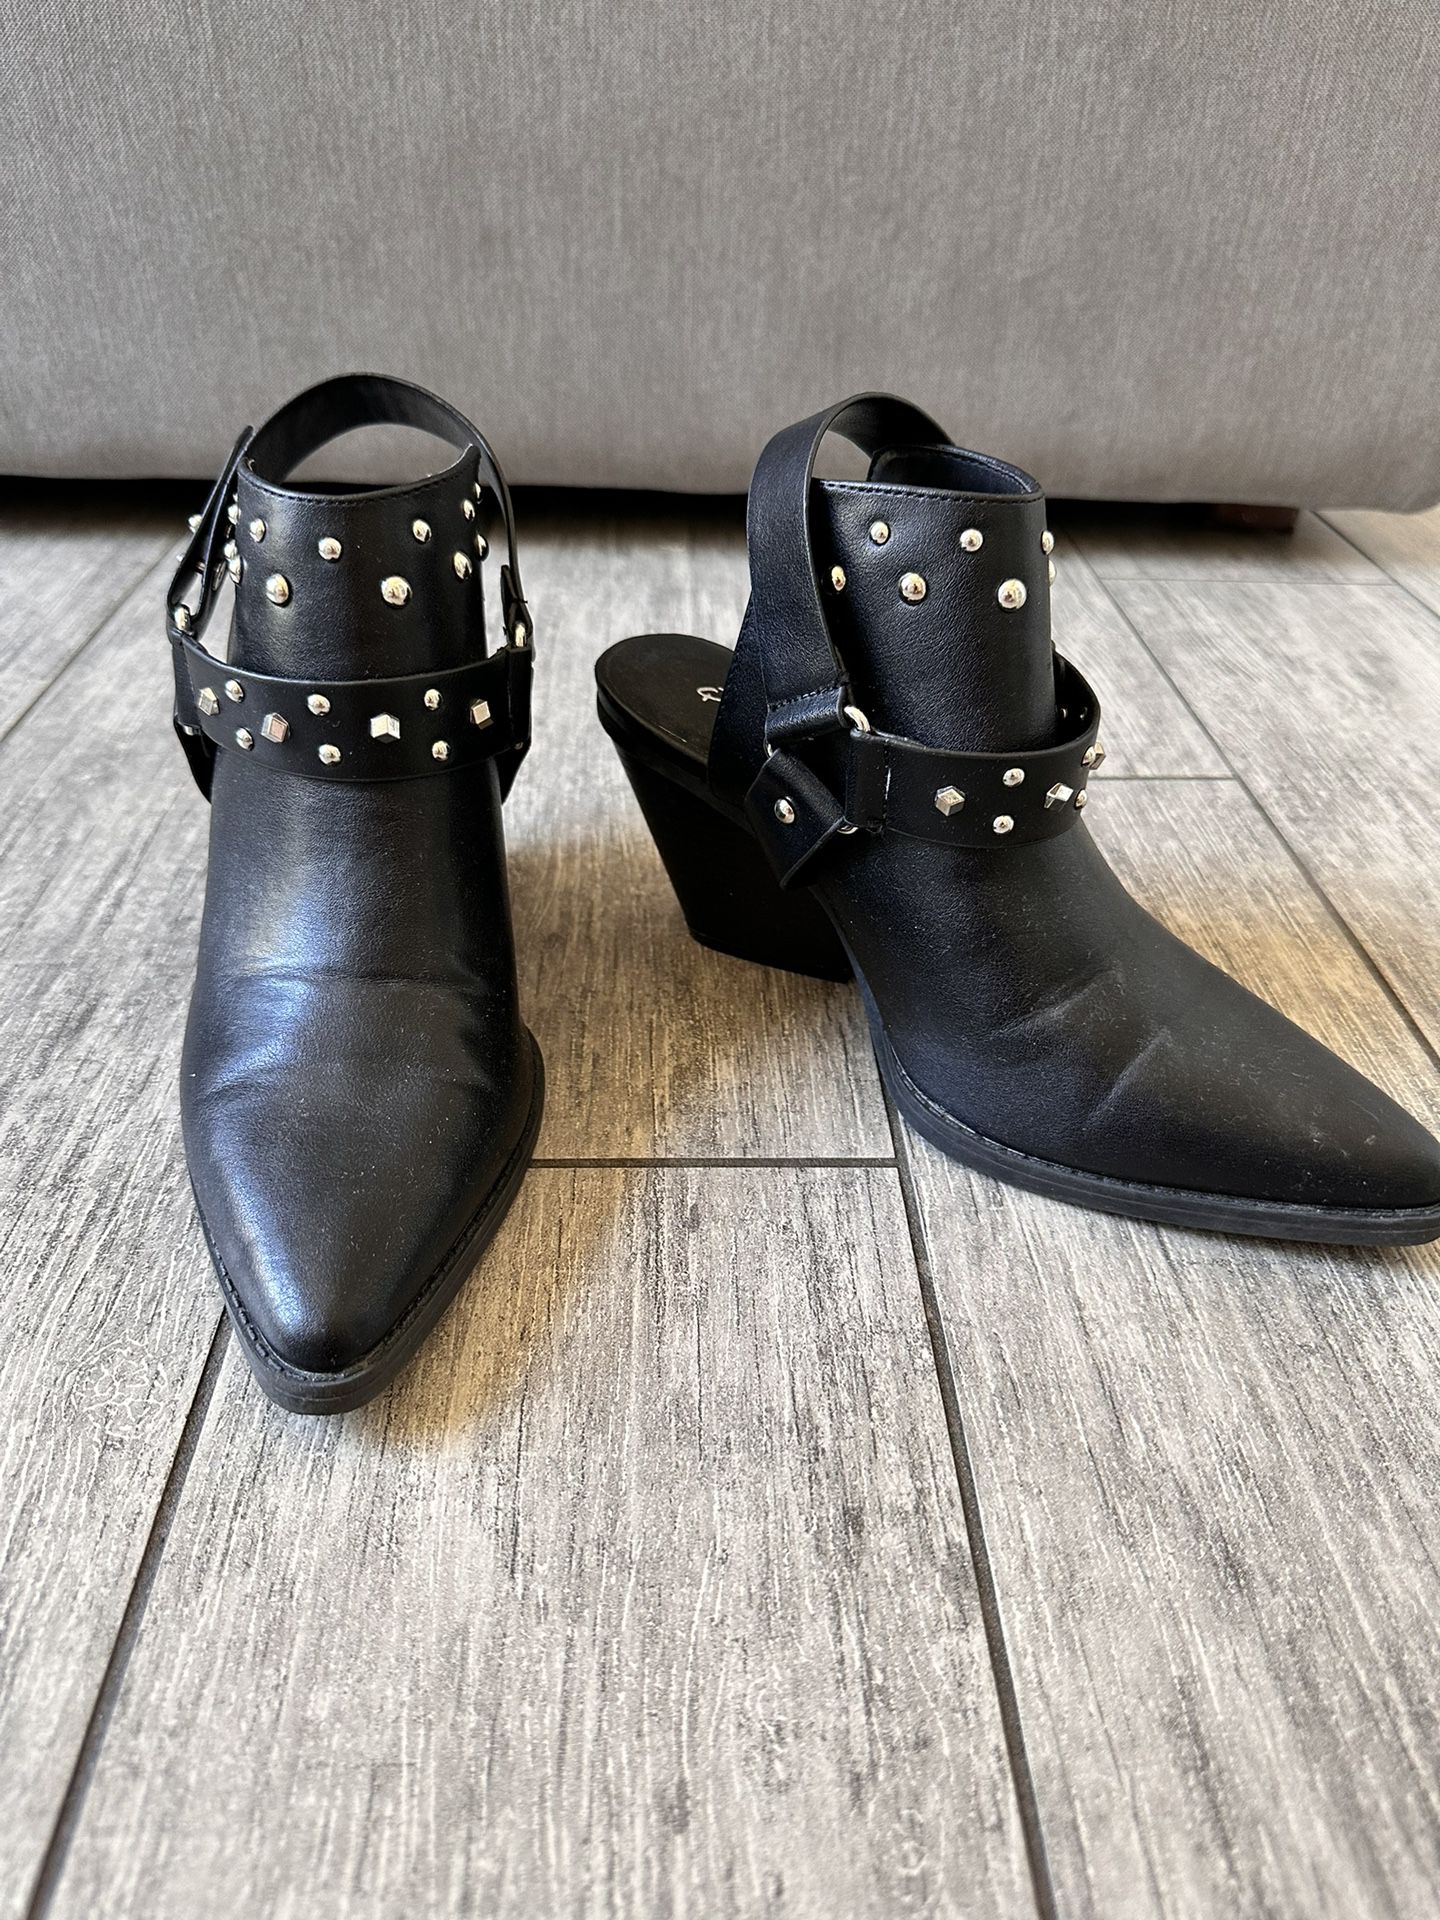 Black Booties - Size 6.5 